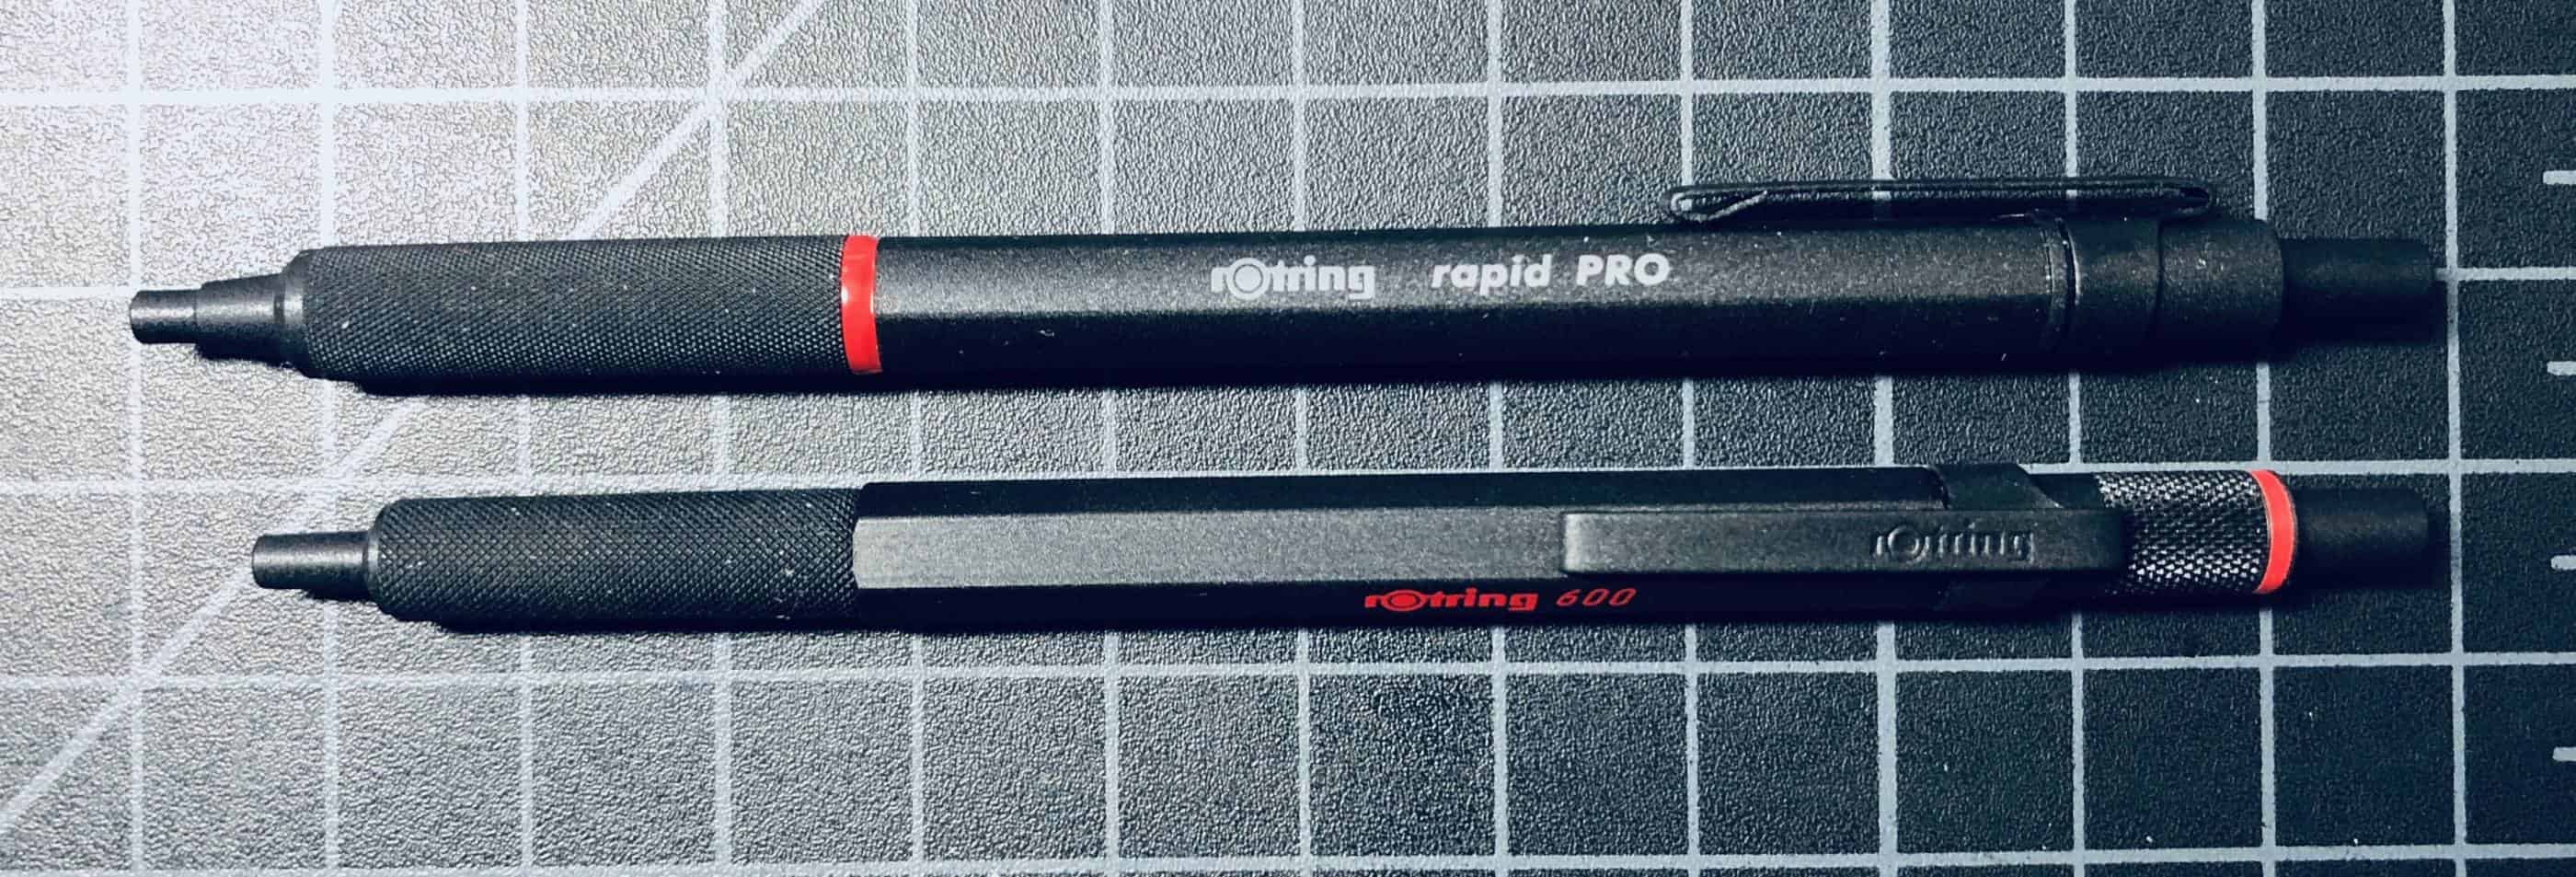 Rotring 600 vs Rapid Pro